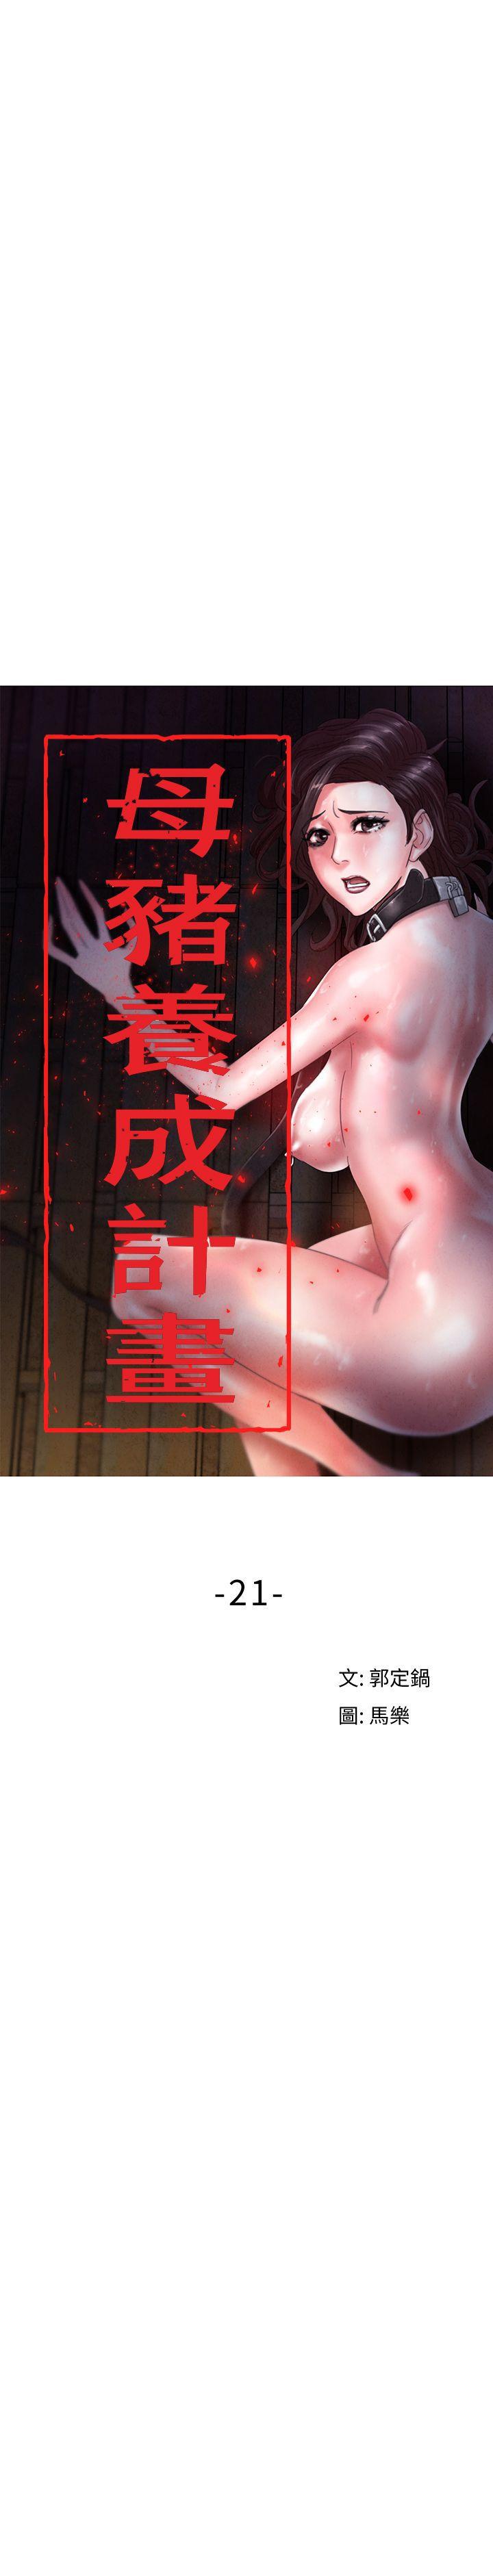 h火影忍者漫画-第21话-母猪的新主人全彩韩漫标签